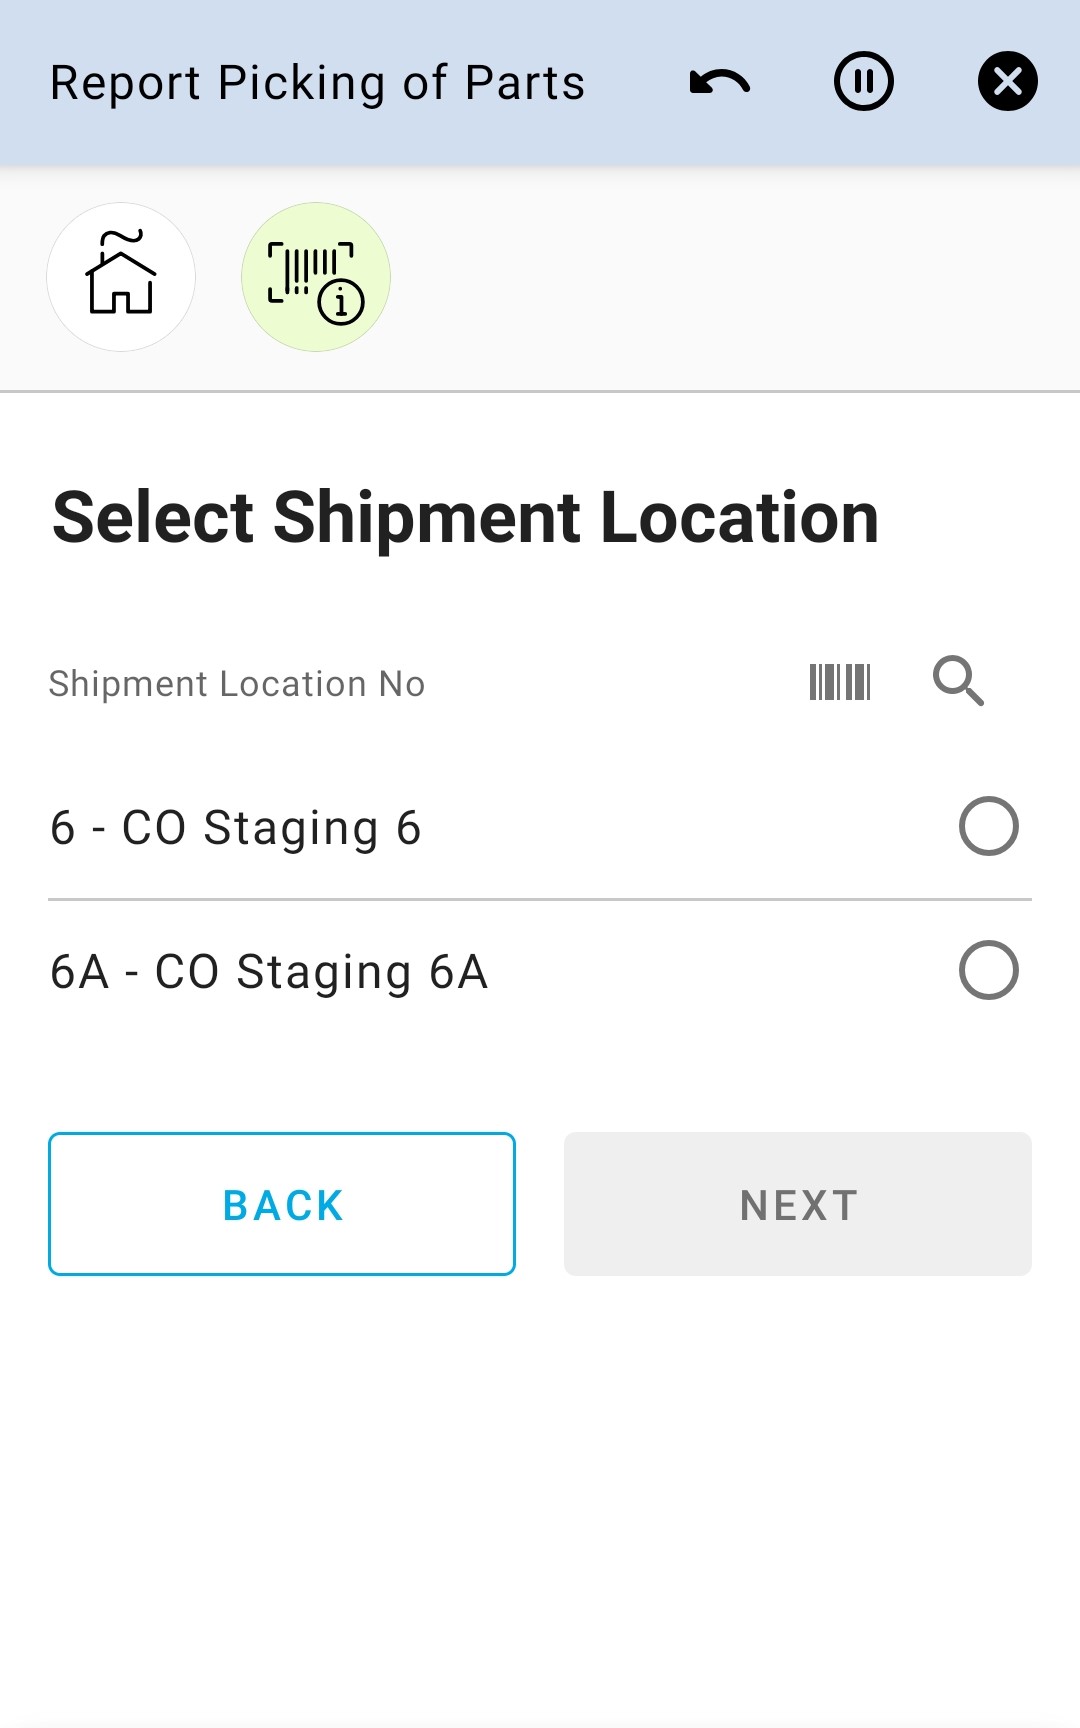 Select Shipment Location